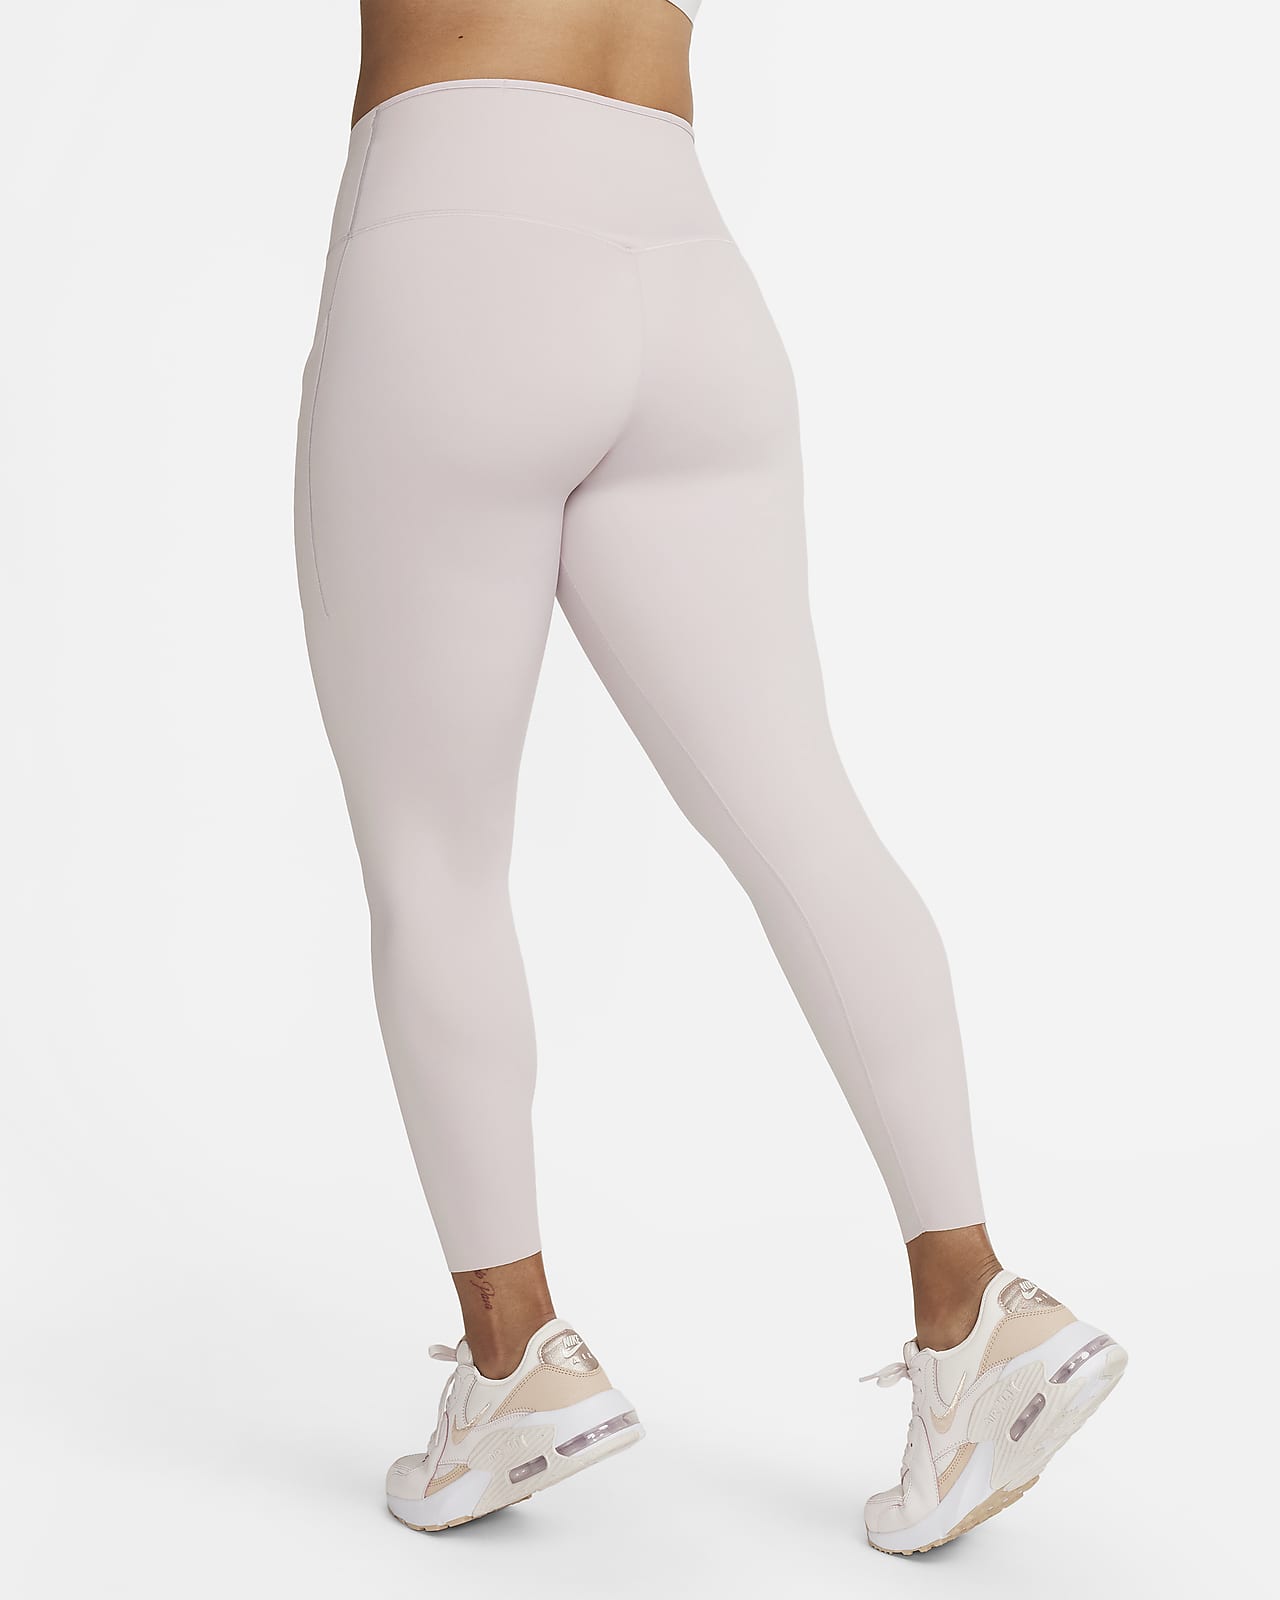 Legging 7/8 mid-rise woman Nike Dri-FIT Go - Baselayers - Textile -  Handball wear